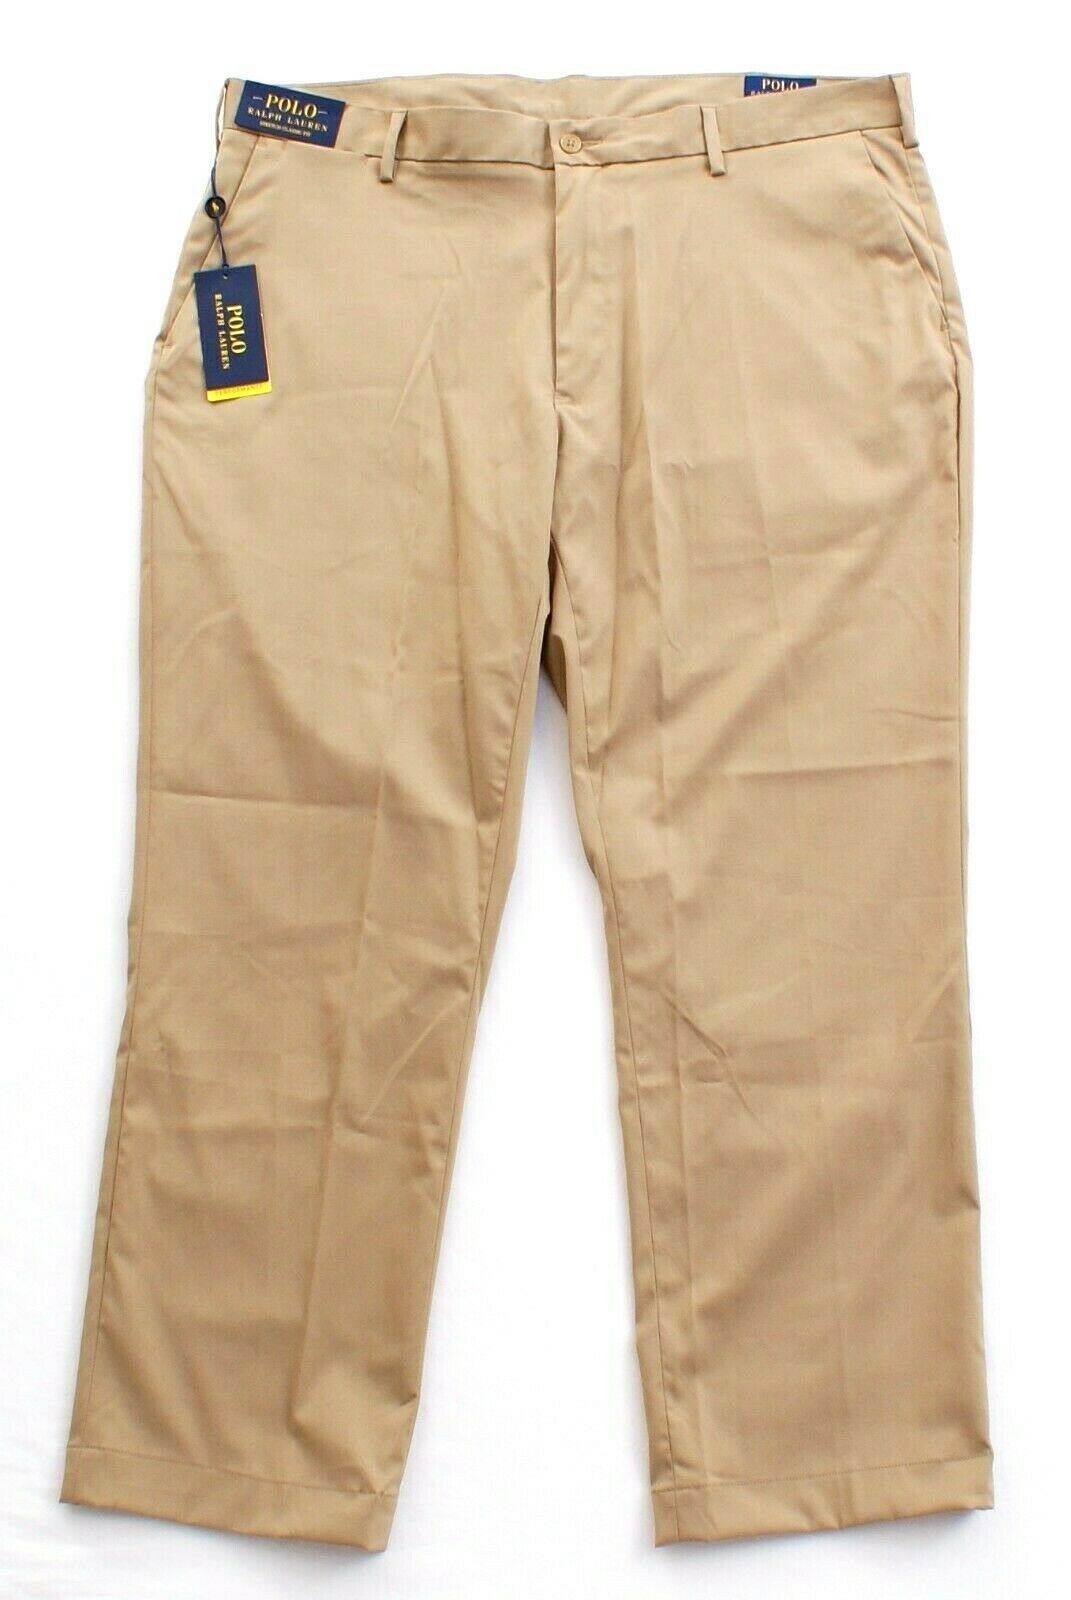 Polo Ralph Lauren Performance Khaki Stretch Classic Fit Pants Men's NWT - $74.24